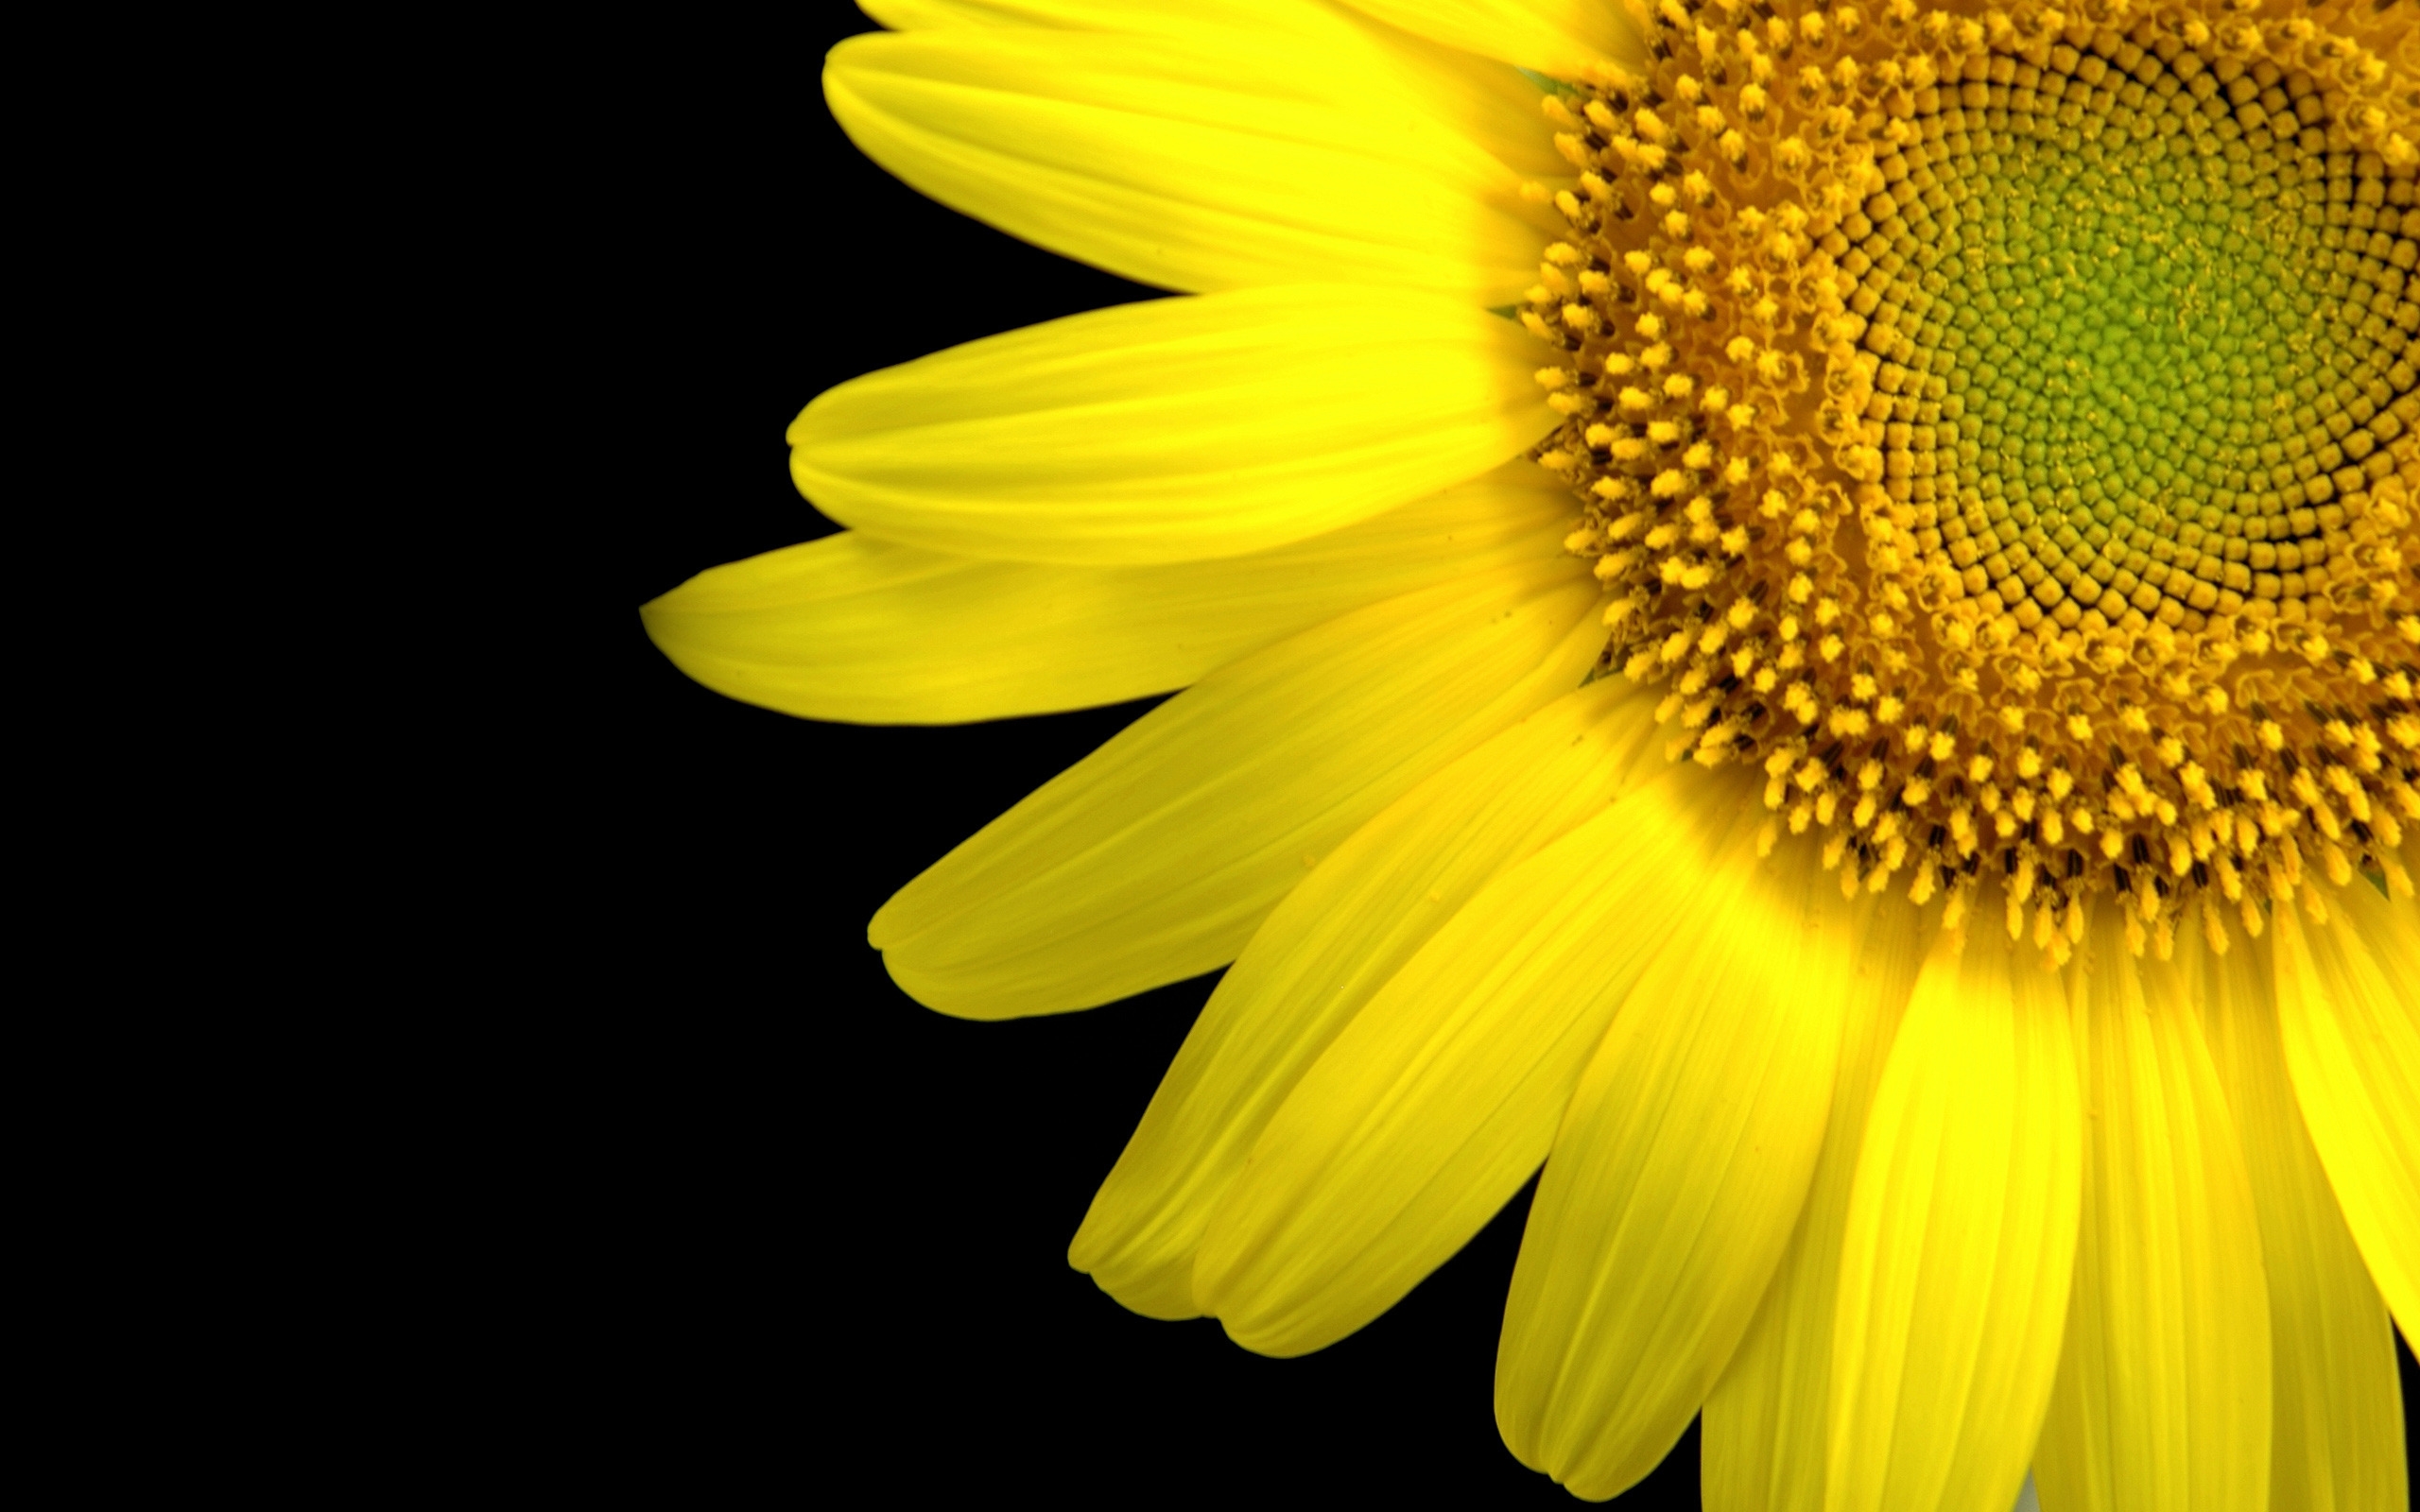 Sunflower Close-Up for 2560 x 1600 widescreen resolution